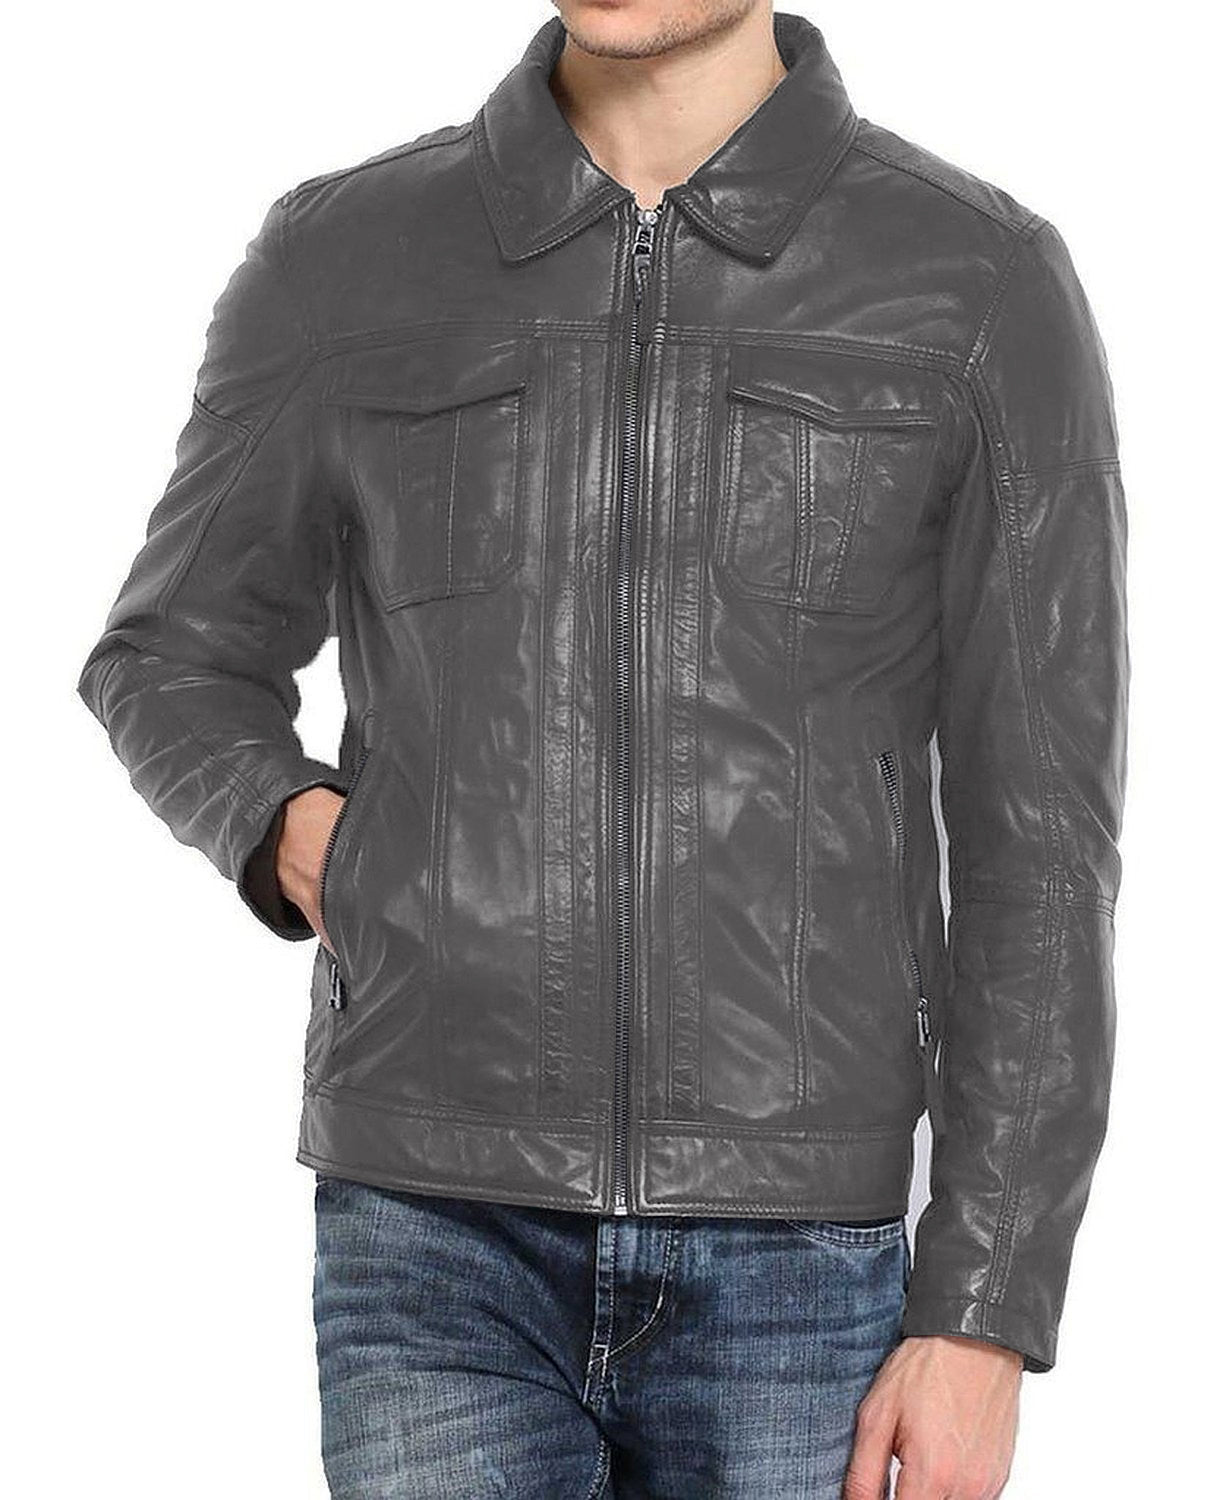 Leather Jackets Hub Mens Genuine Lambskin Leather Jacket (Black, Regal Jacket) - 1501205